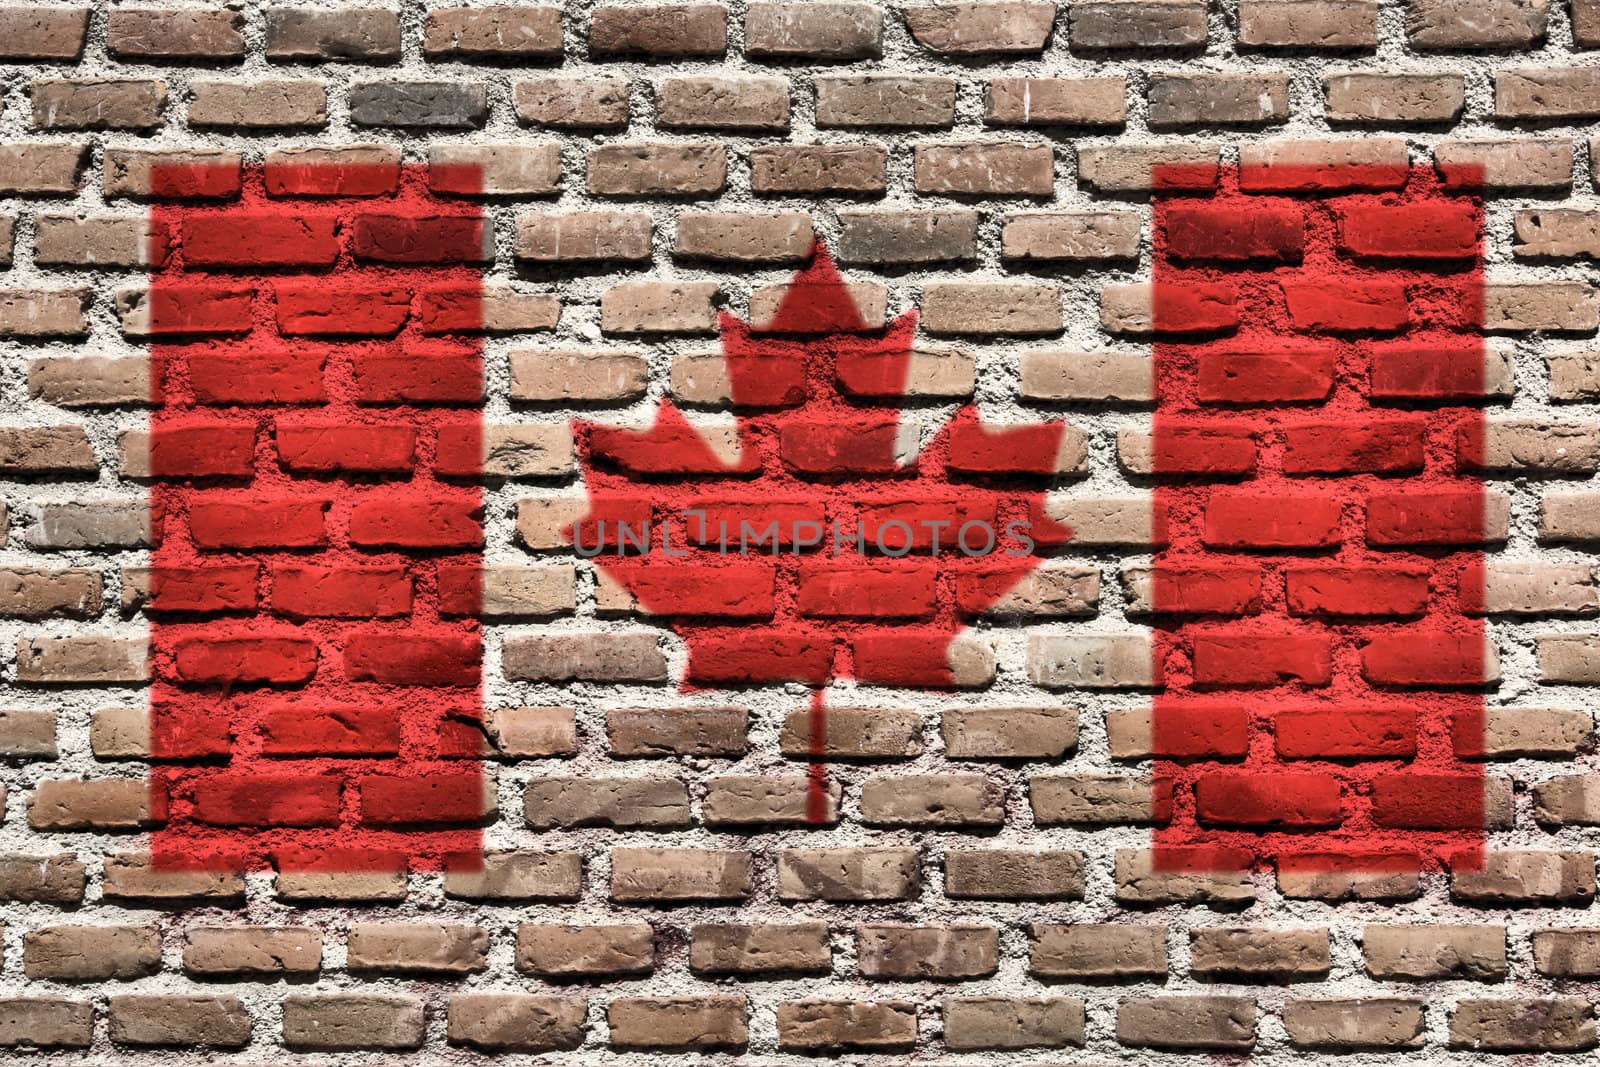 Canada national flag spray painted on a brick wall. Grunge graffiti.